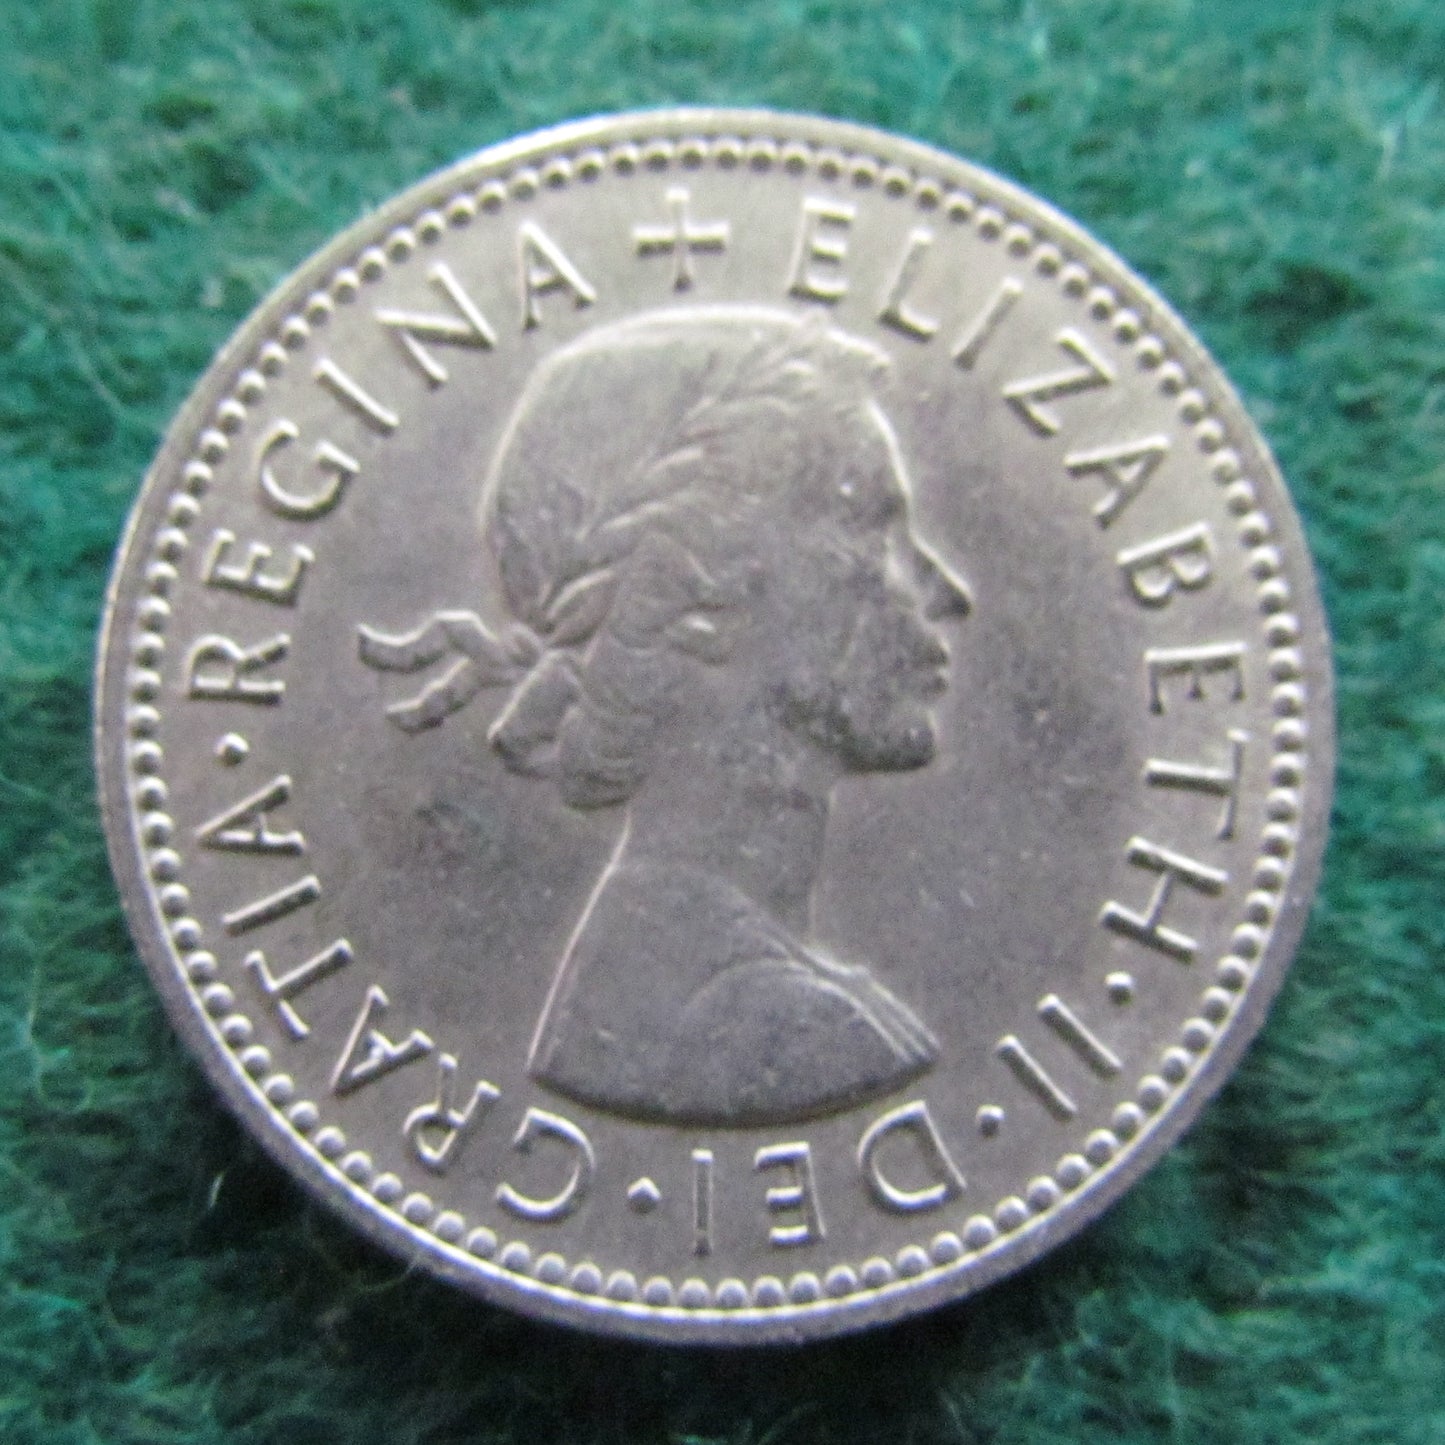 GB British UK English 1956 1 Shilling Queen Elizabeth II Coin